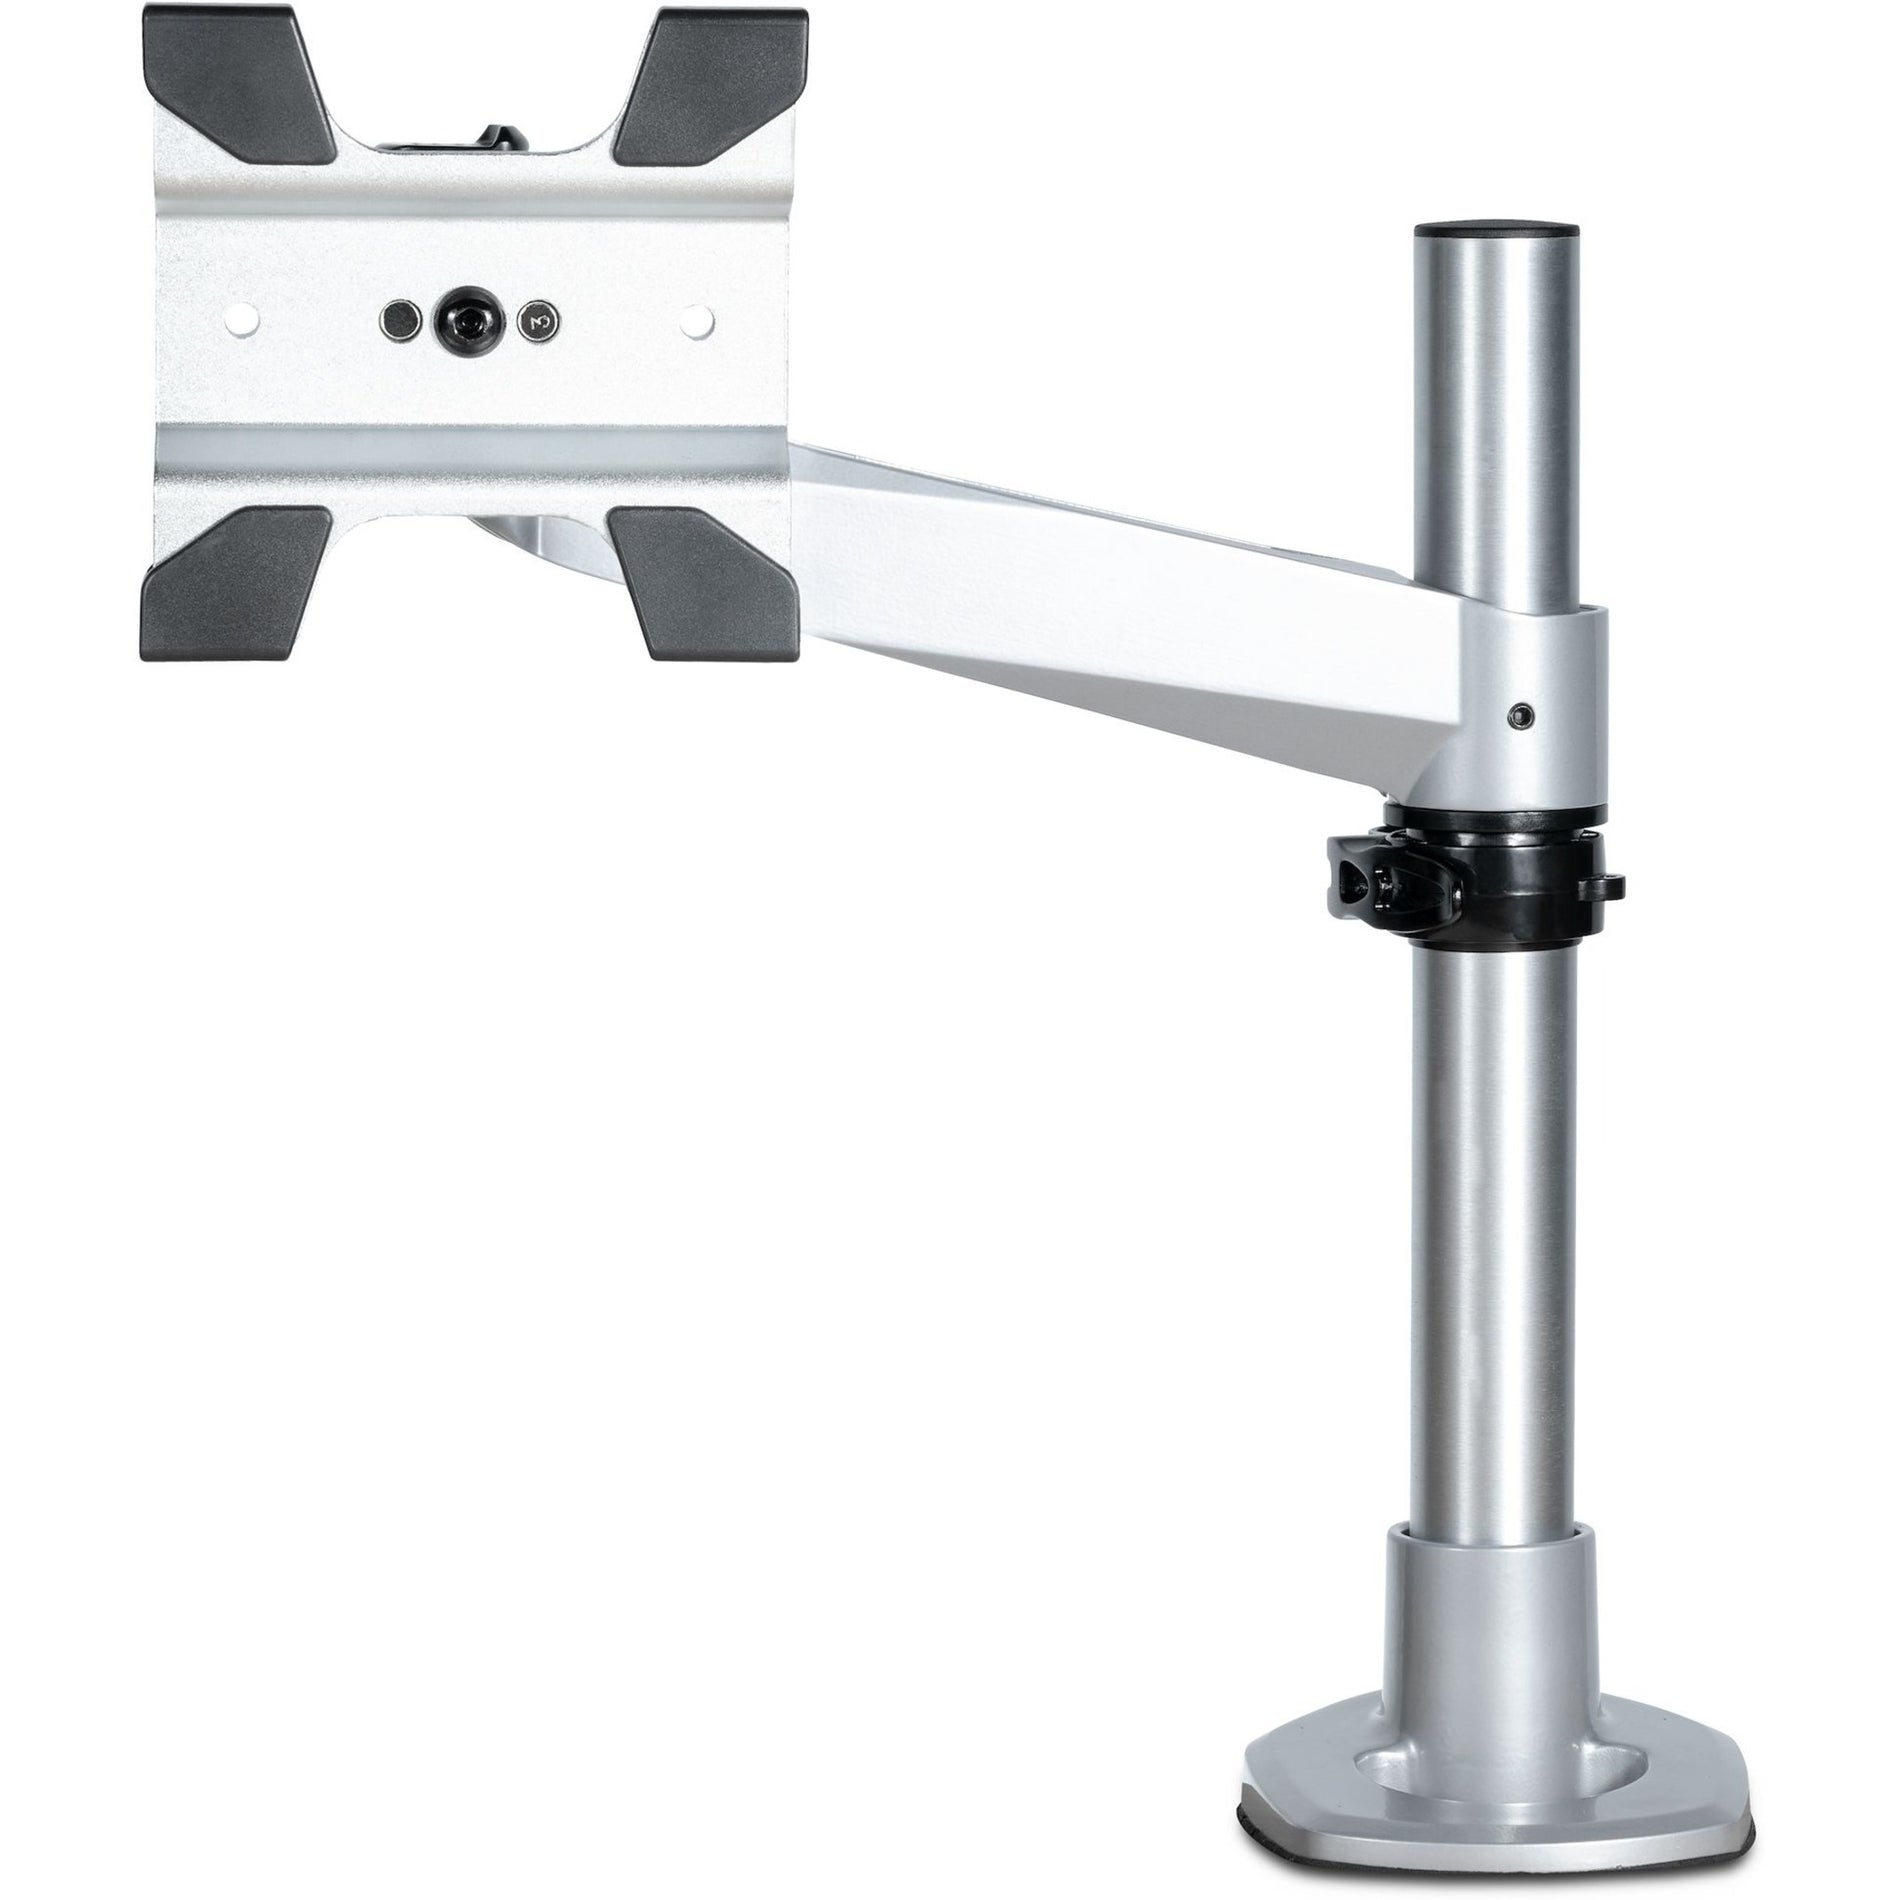 StarTech.com ARMPIVOTB2 Desk Mount Monitor Arm - Premium Aluminum Articulating, 360° Rotation, Swivel, 30.9 lb Load Capacity